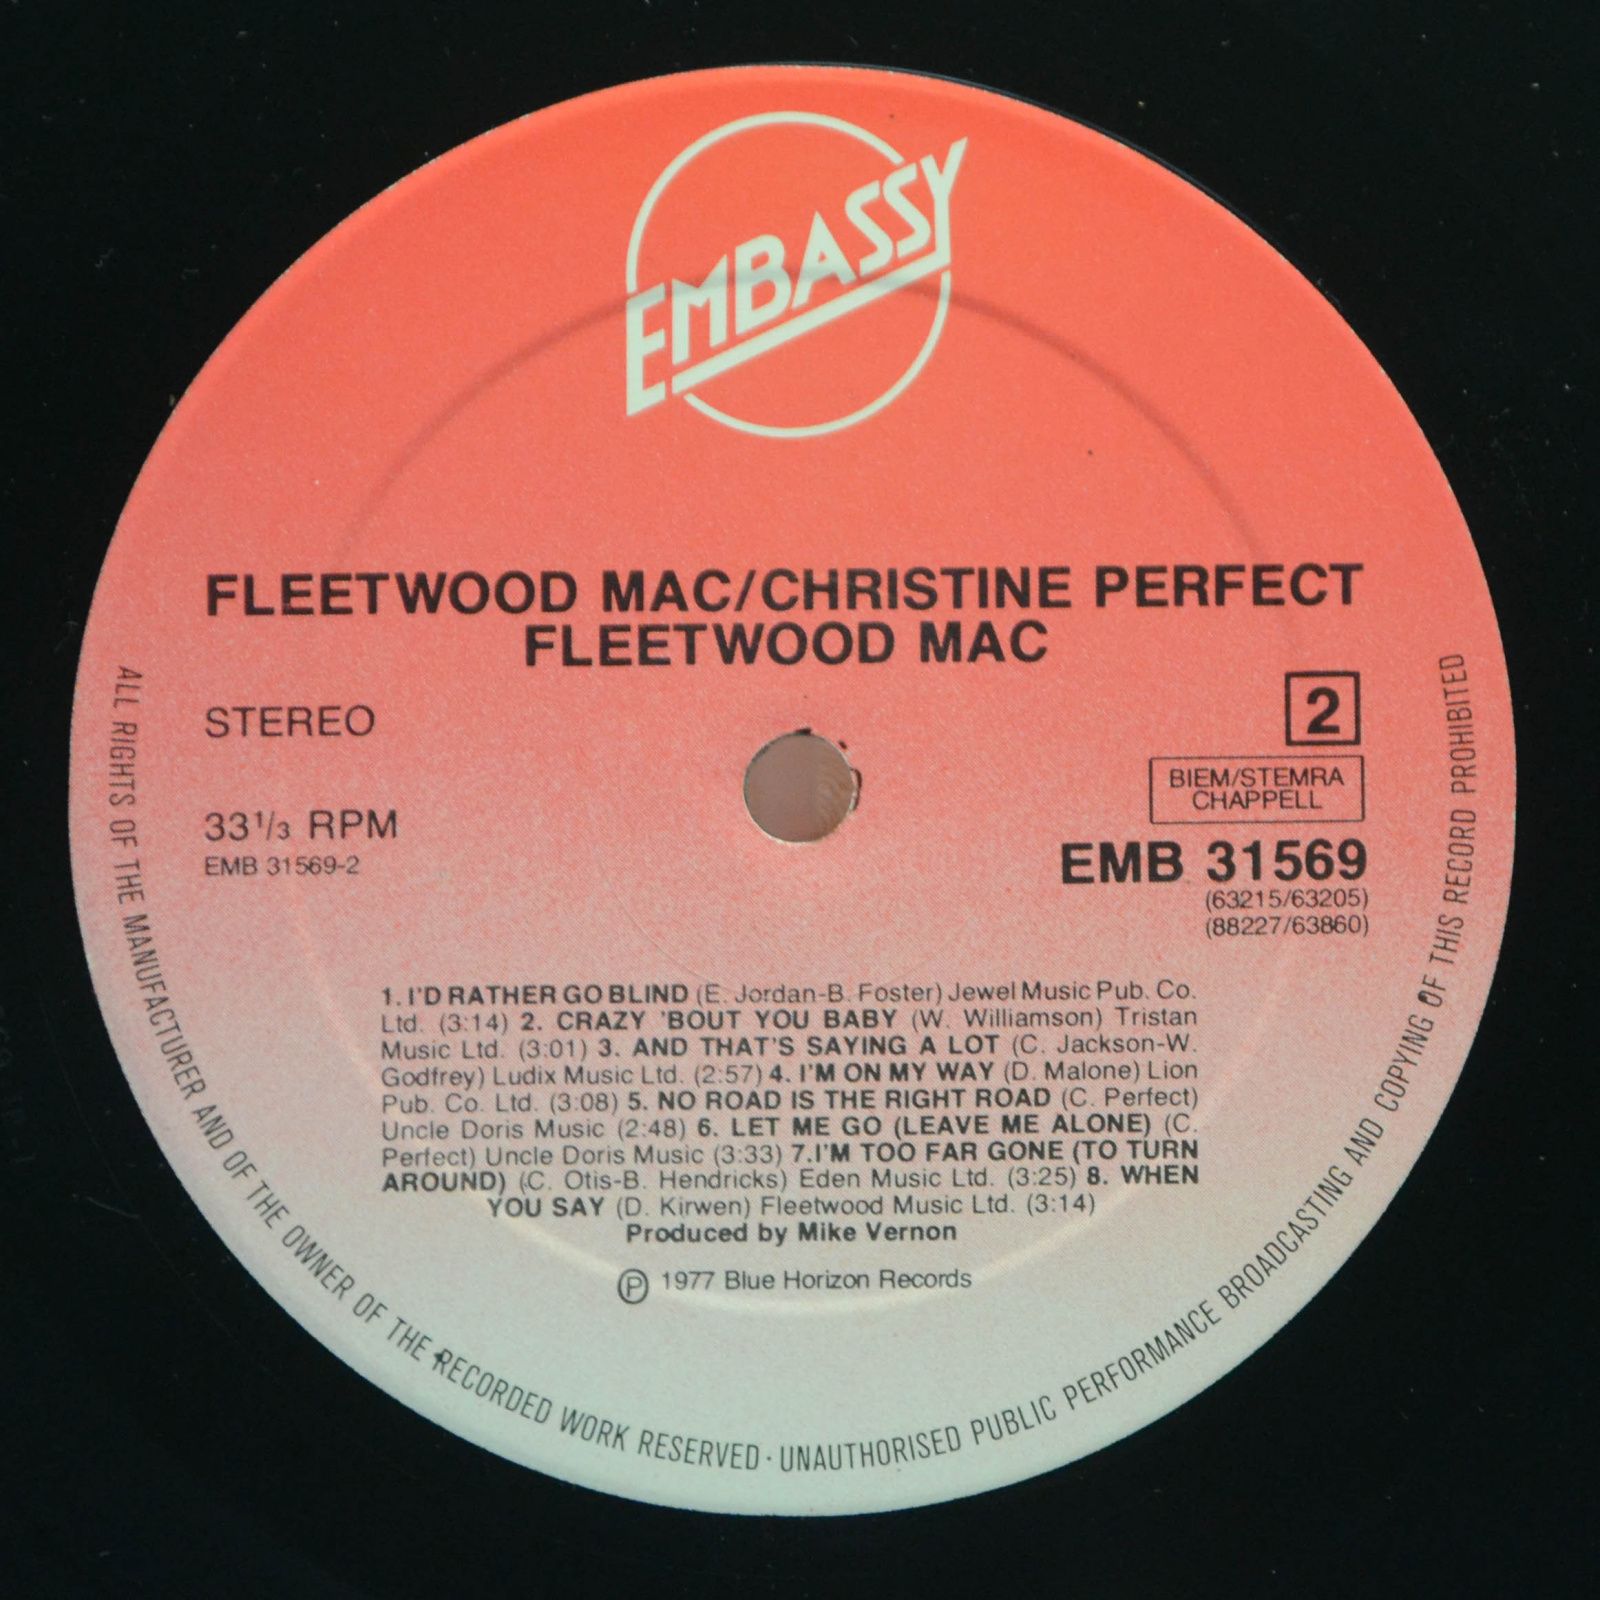 Fleetwood Mac And Christine Perfect — Albatross, 1977